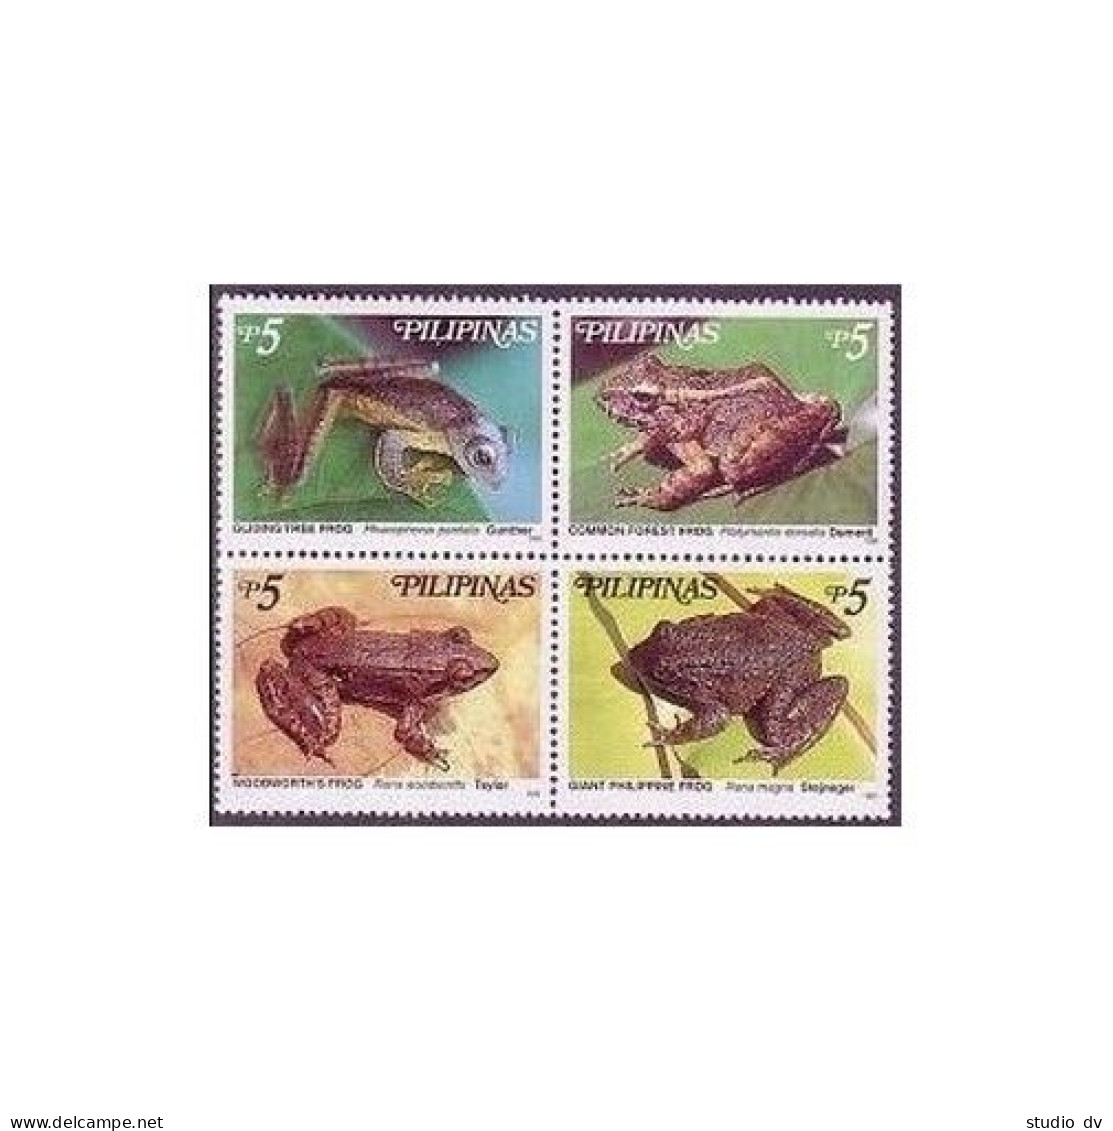 Philippines 2612 Ad Block, 2613 Ac Sheet, MNH. Frogs, 1999. - Philippinen